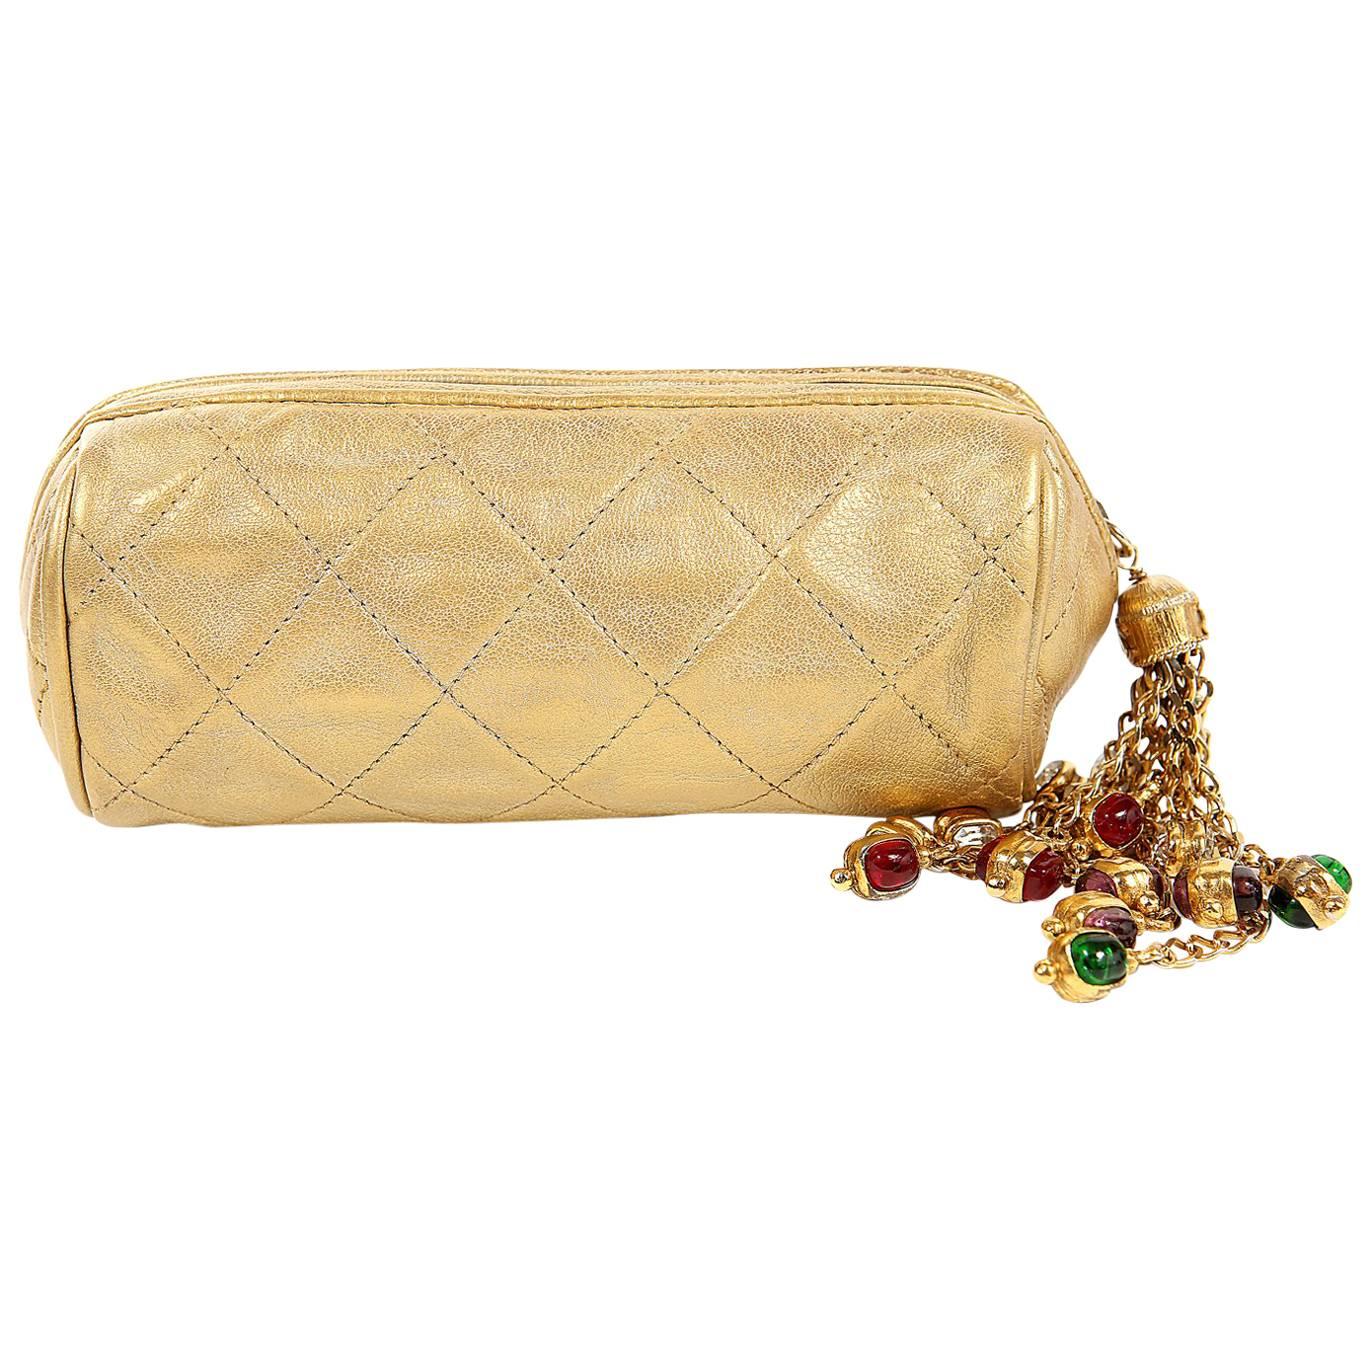 Chanel Gold Leather Gripoix Tassel Evening Bag